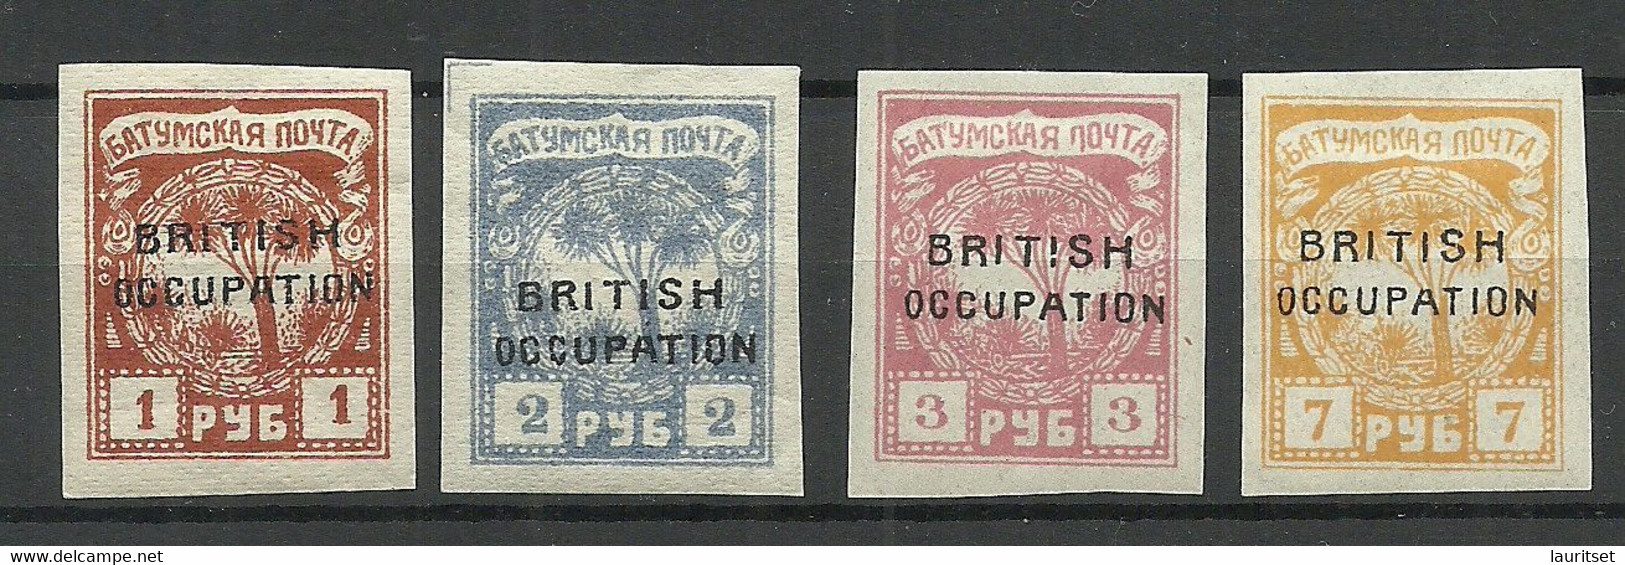 BATUM Batumi RUSSLAND RUSSIA 1919 British Occupation, 4 Stamps,* - 1919-20 Bezetting: Groot-Brittannië